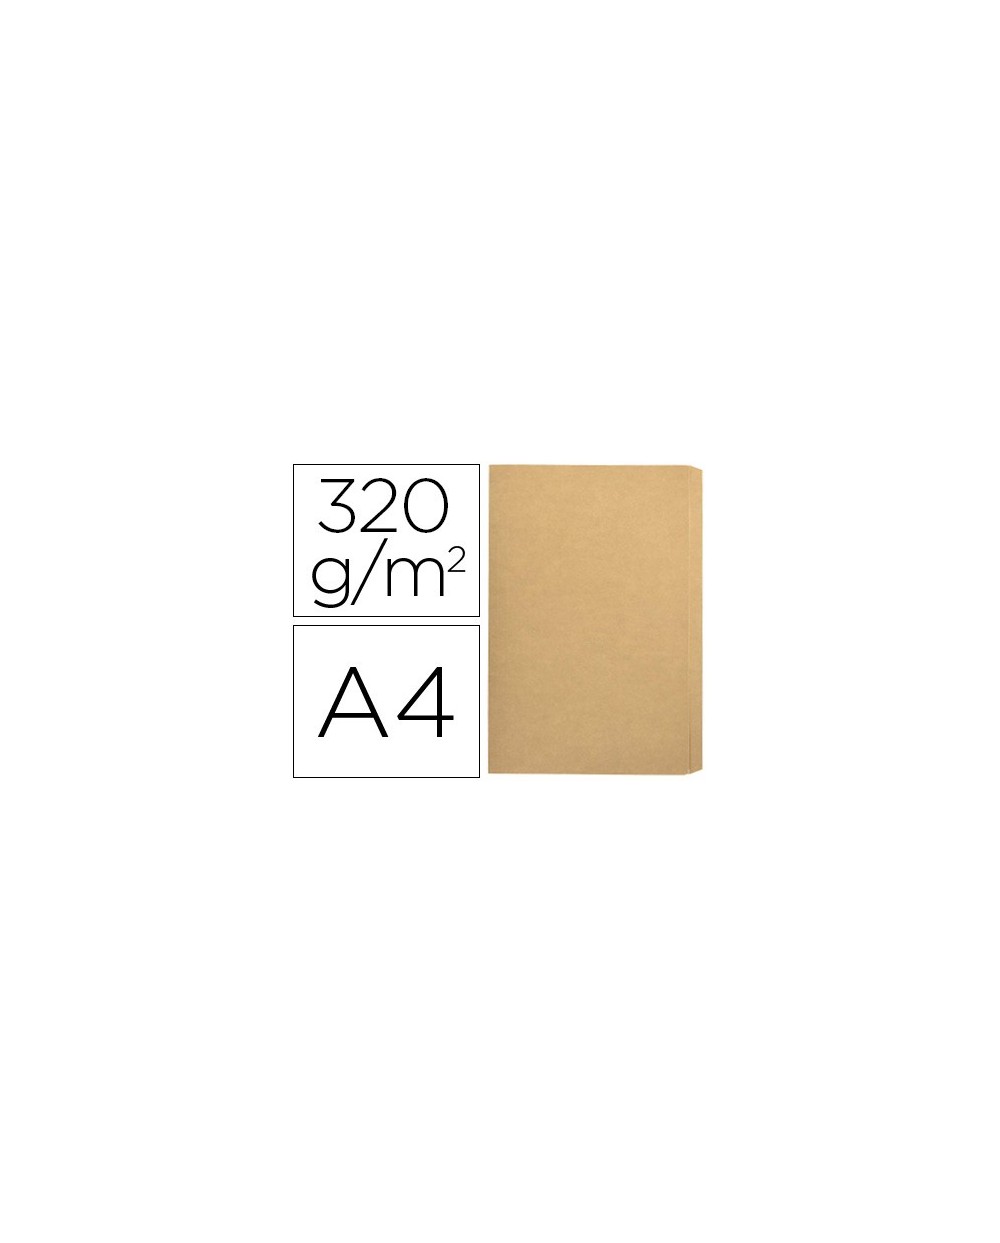 Subcarpeta cartulina gio folio pocket bolsa con solapa intenso kraft bicolor 320g m2